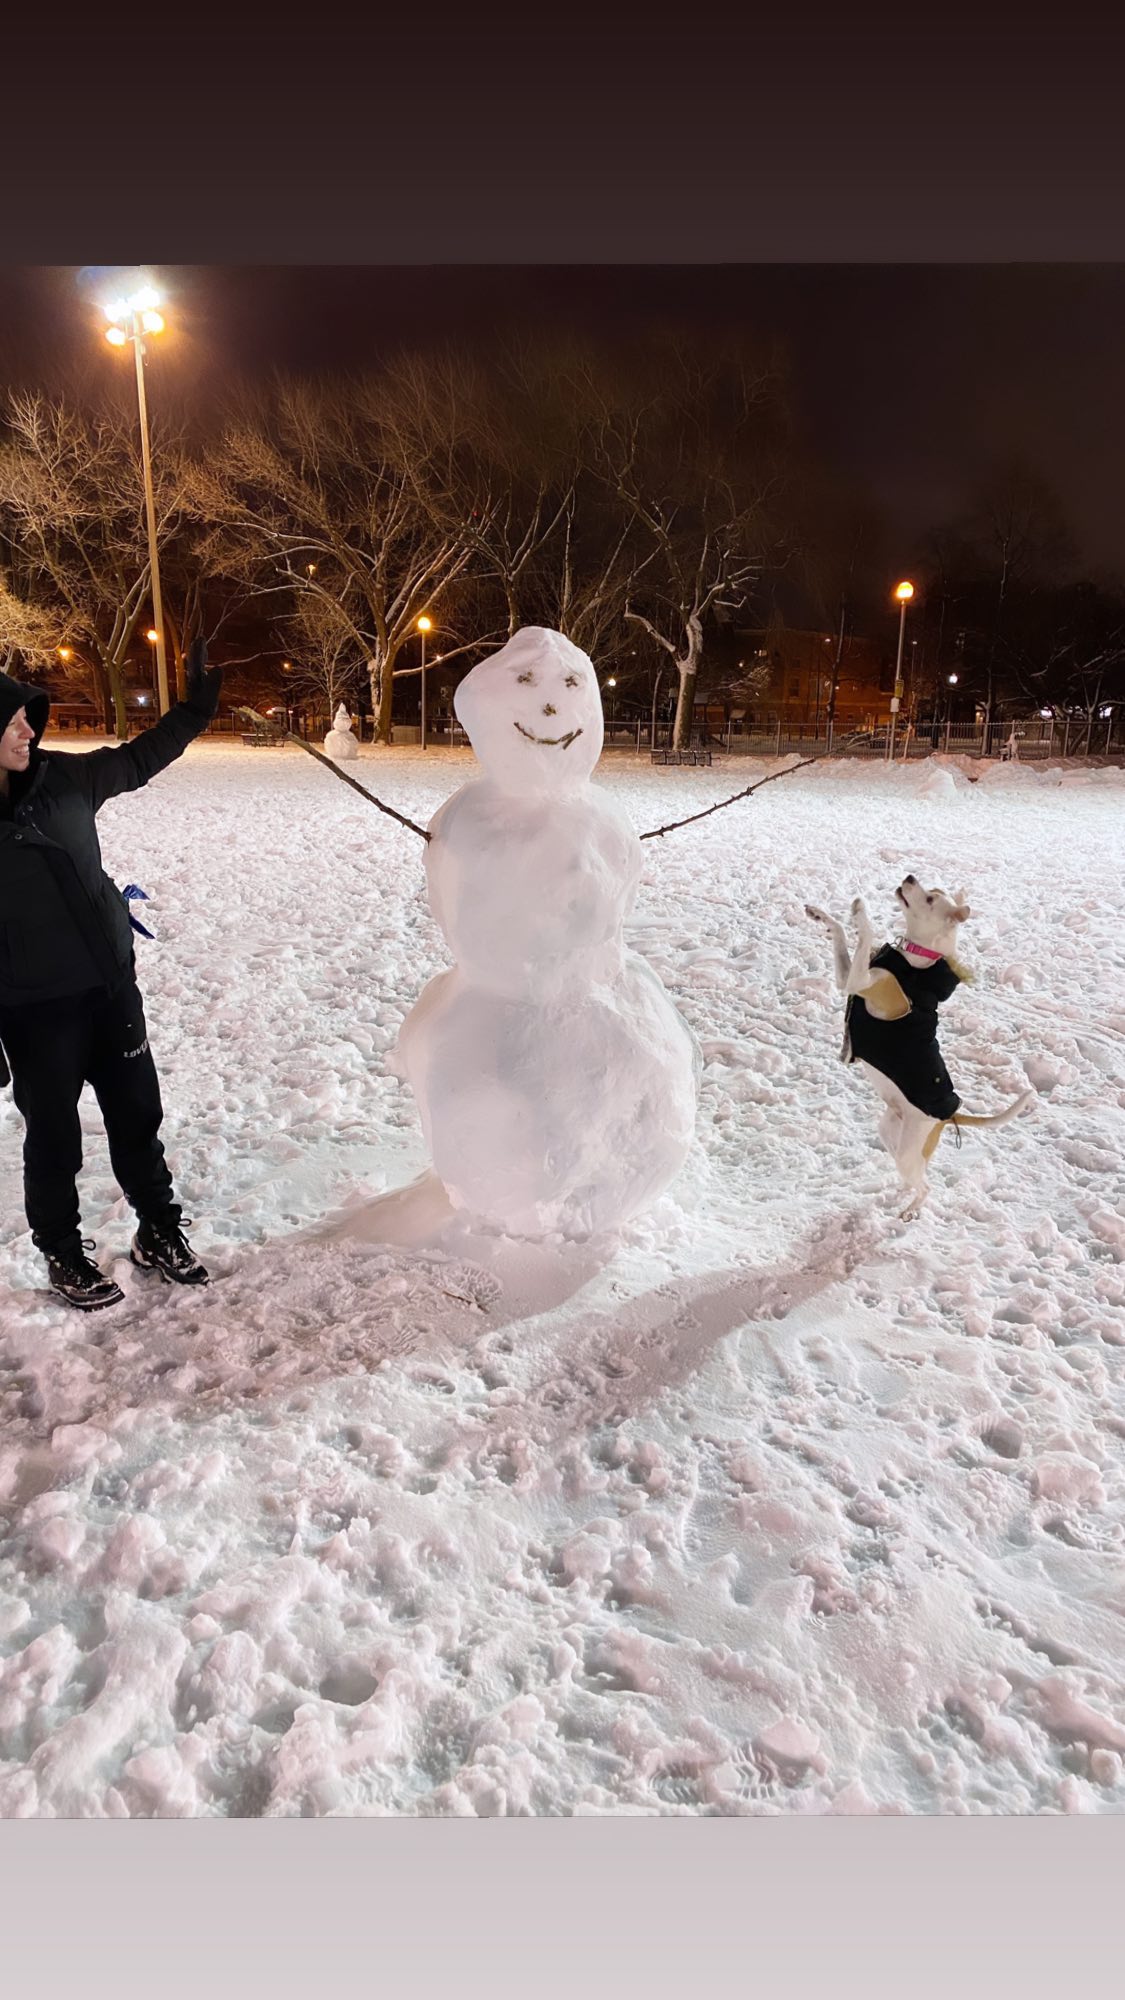 Sydney Sweeney Builds a Snowman Army! - Photo 3